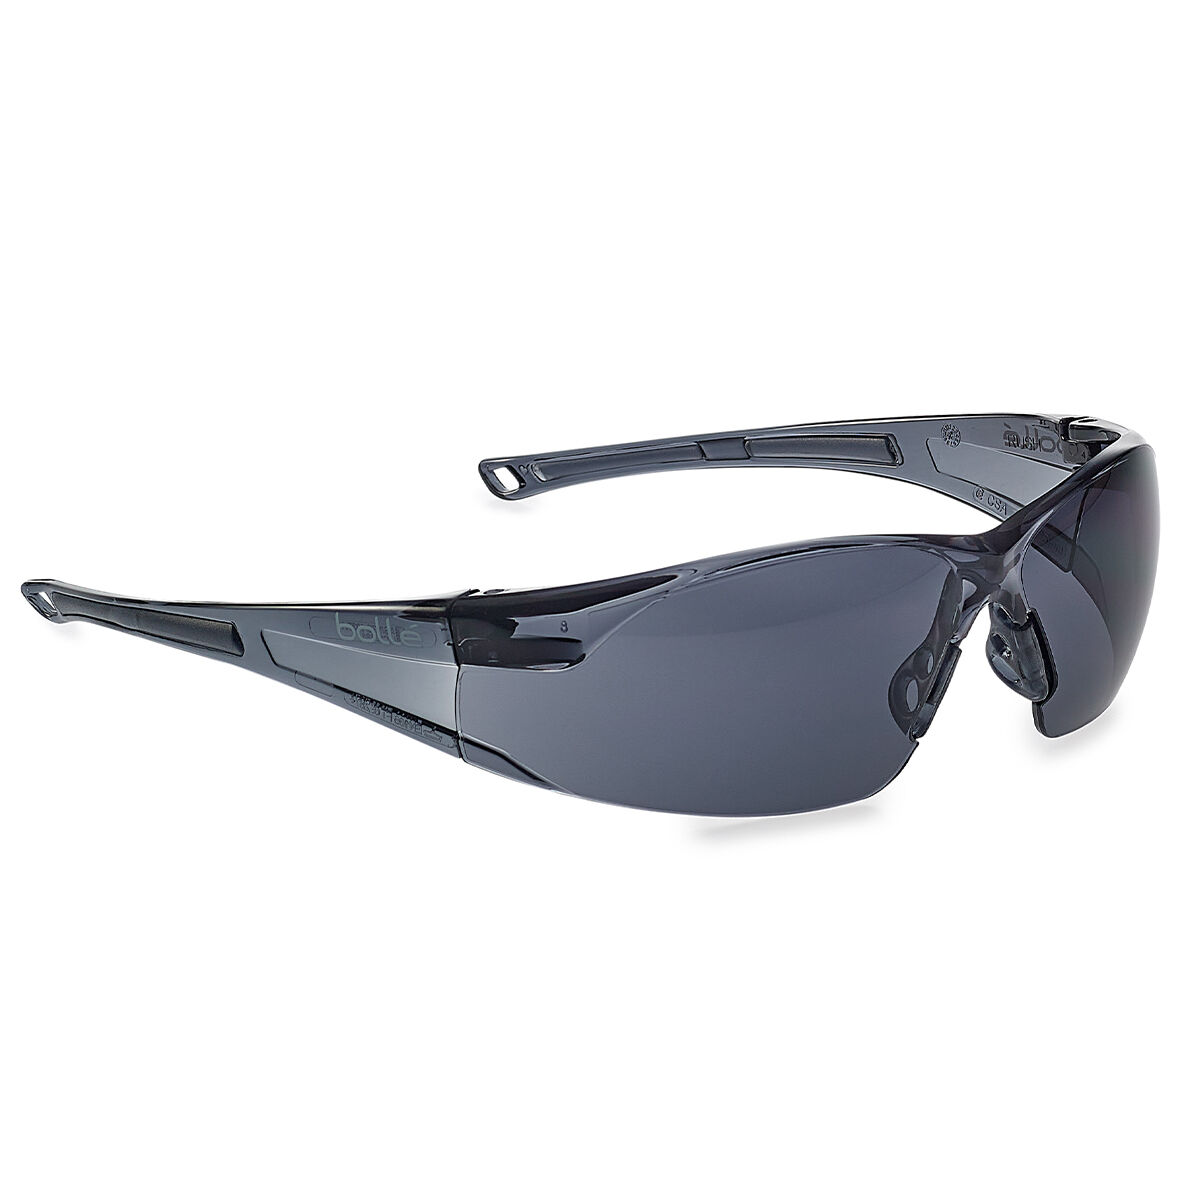 Smoke Lens RUSHPPSF UV Eye Protection Bolle RUSH+ Safety Glasses 